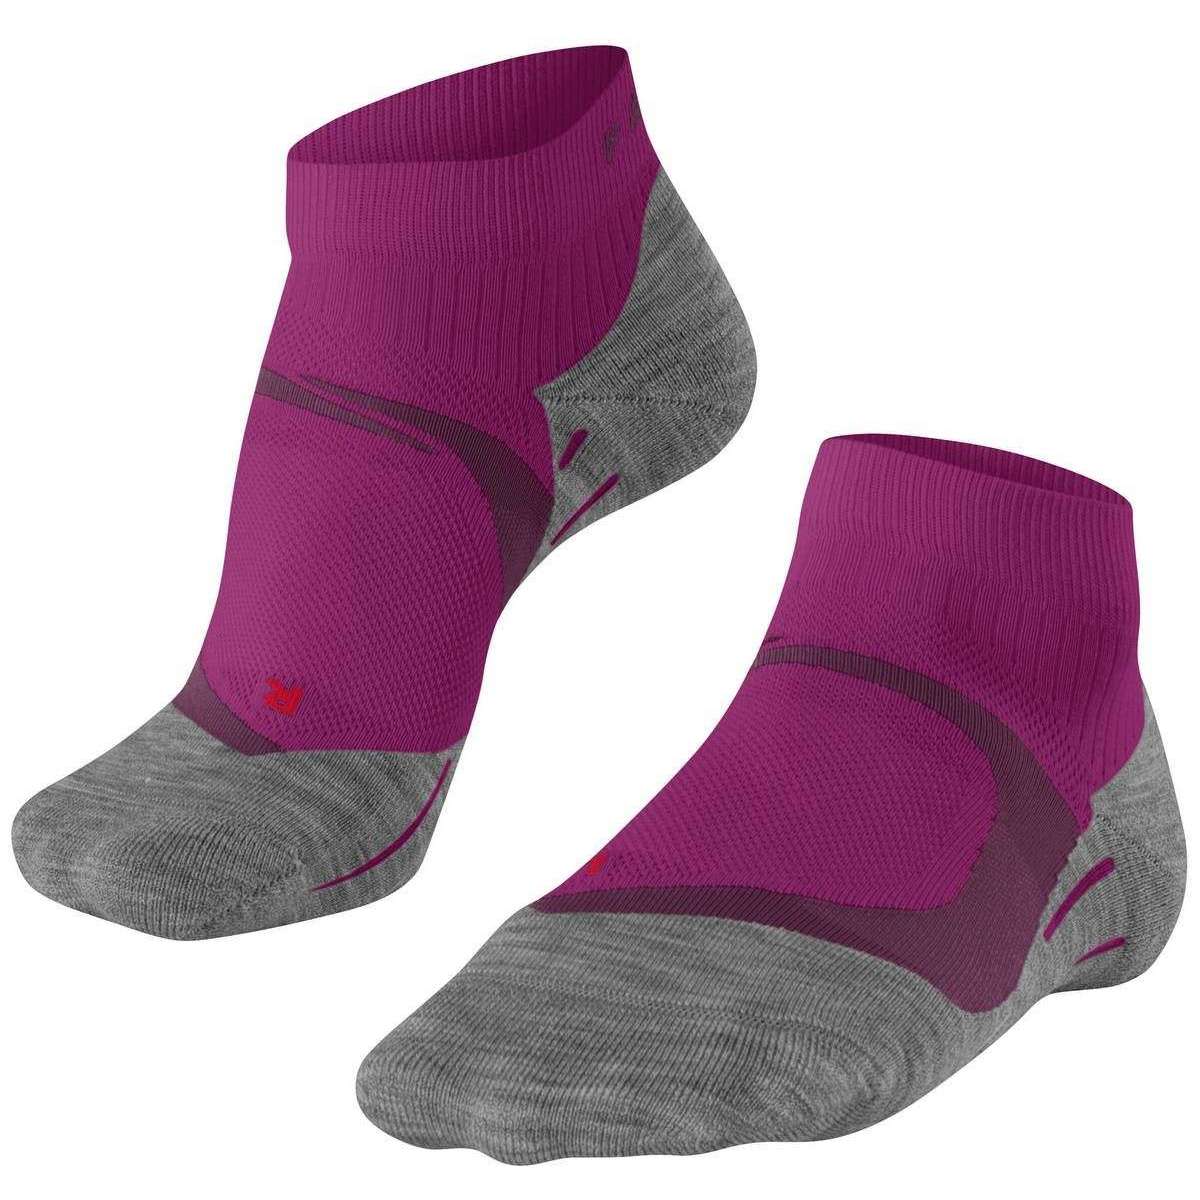 Falke RU4 Endurance Cool Short Socks - Radiant Orchid Purple